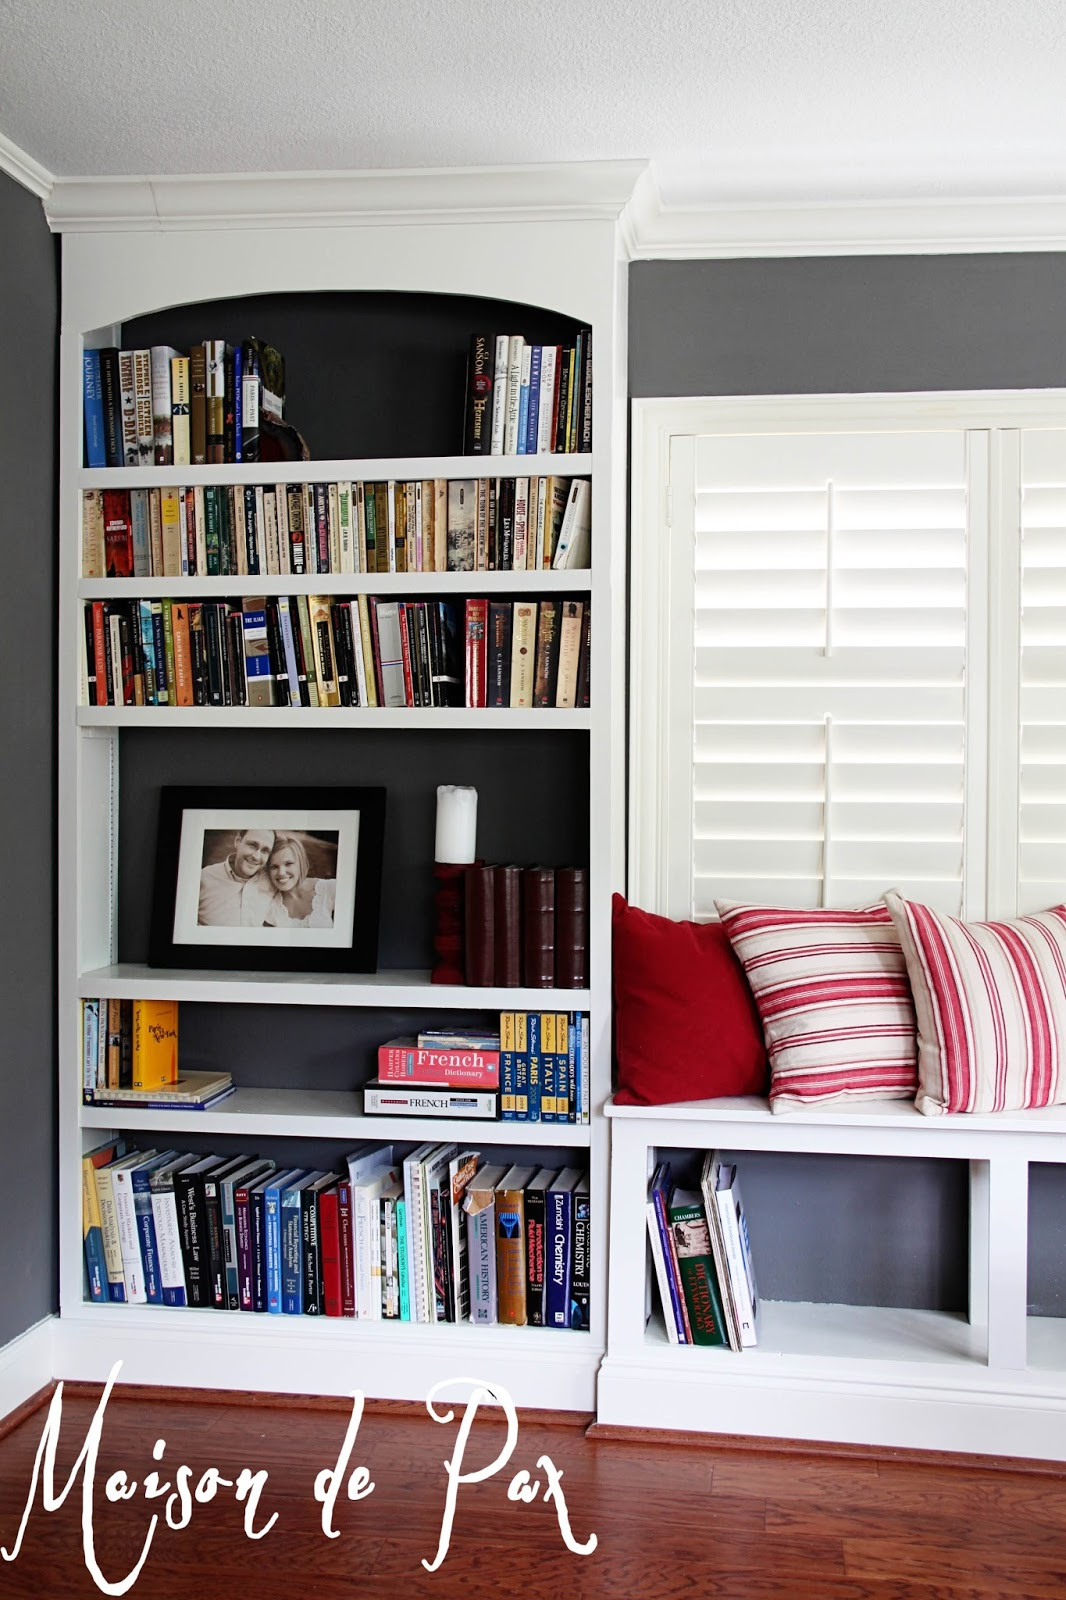 Best ideas about DIY Book Shelves
. Save or Pin DIY Built In Bookshelves Maison de Pax Now.